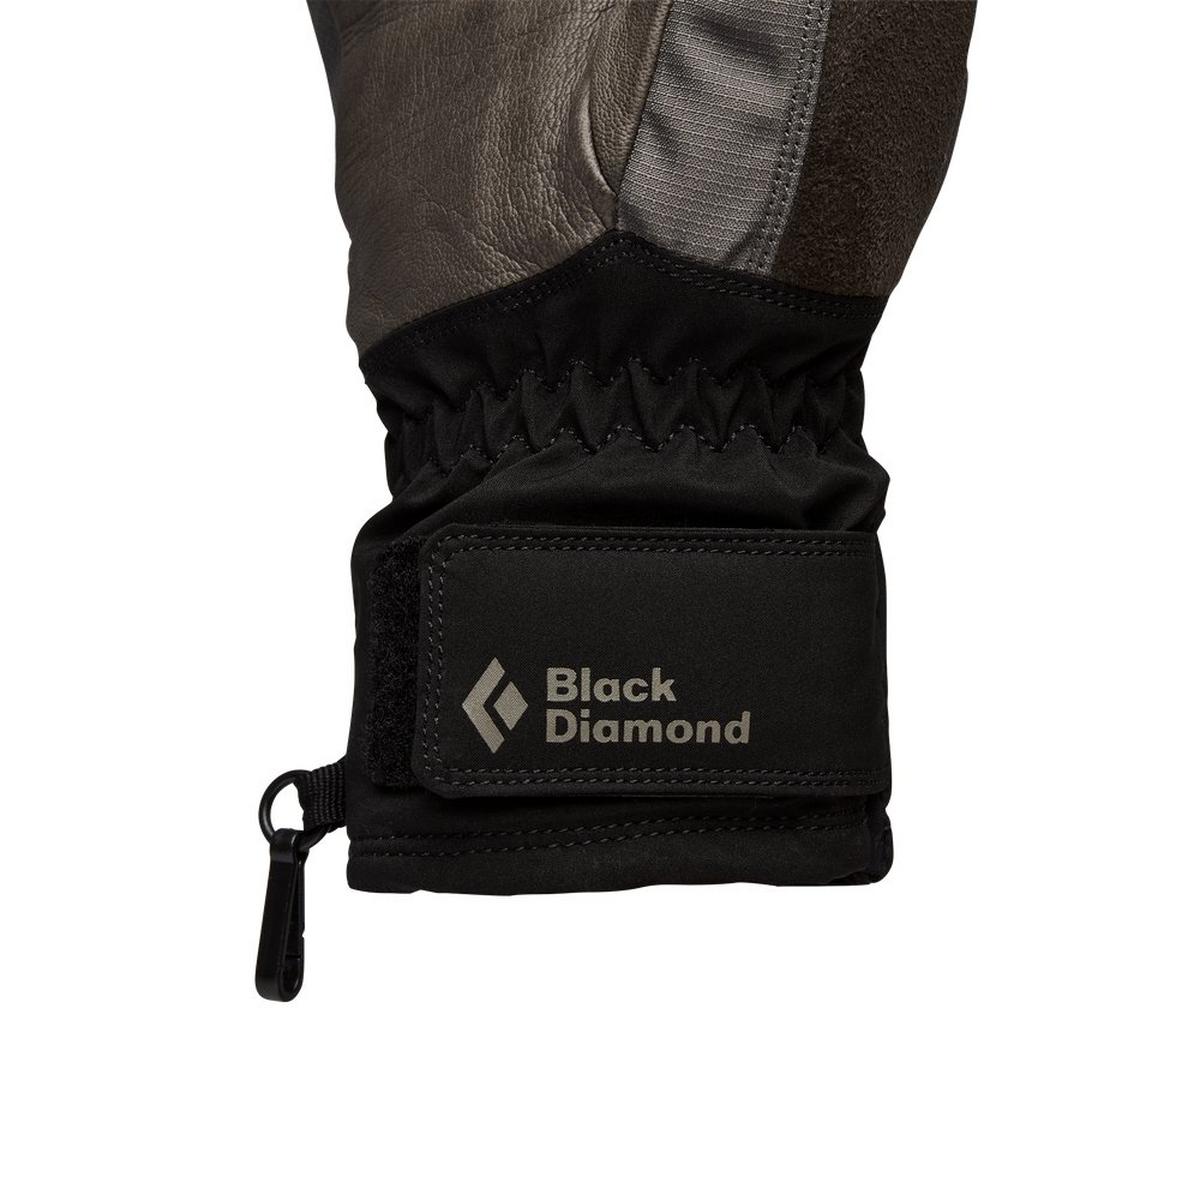 Black Diamond Equipment Men's Mission GORE-TEX Glove - Grey/Black